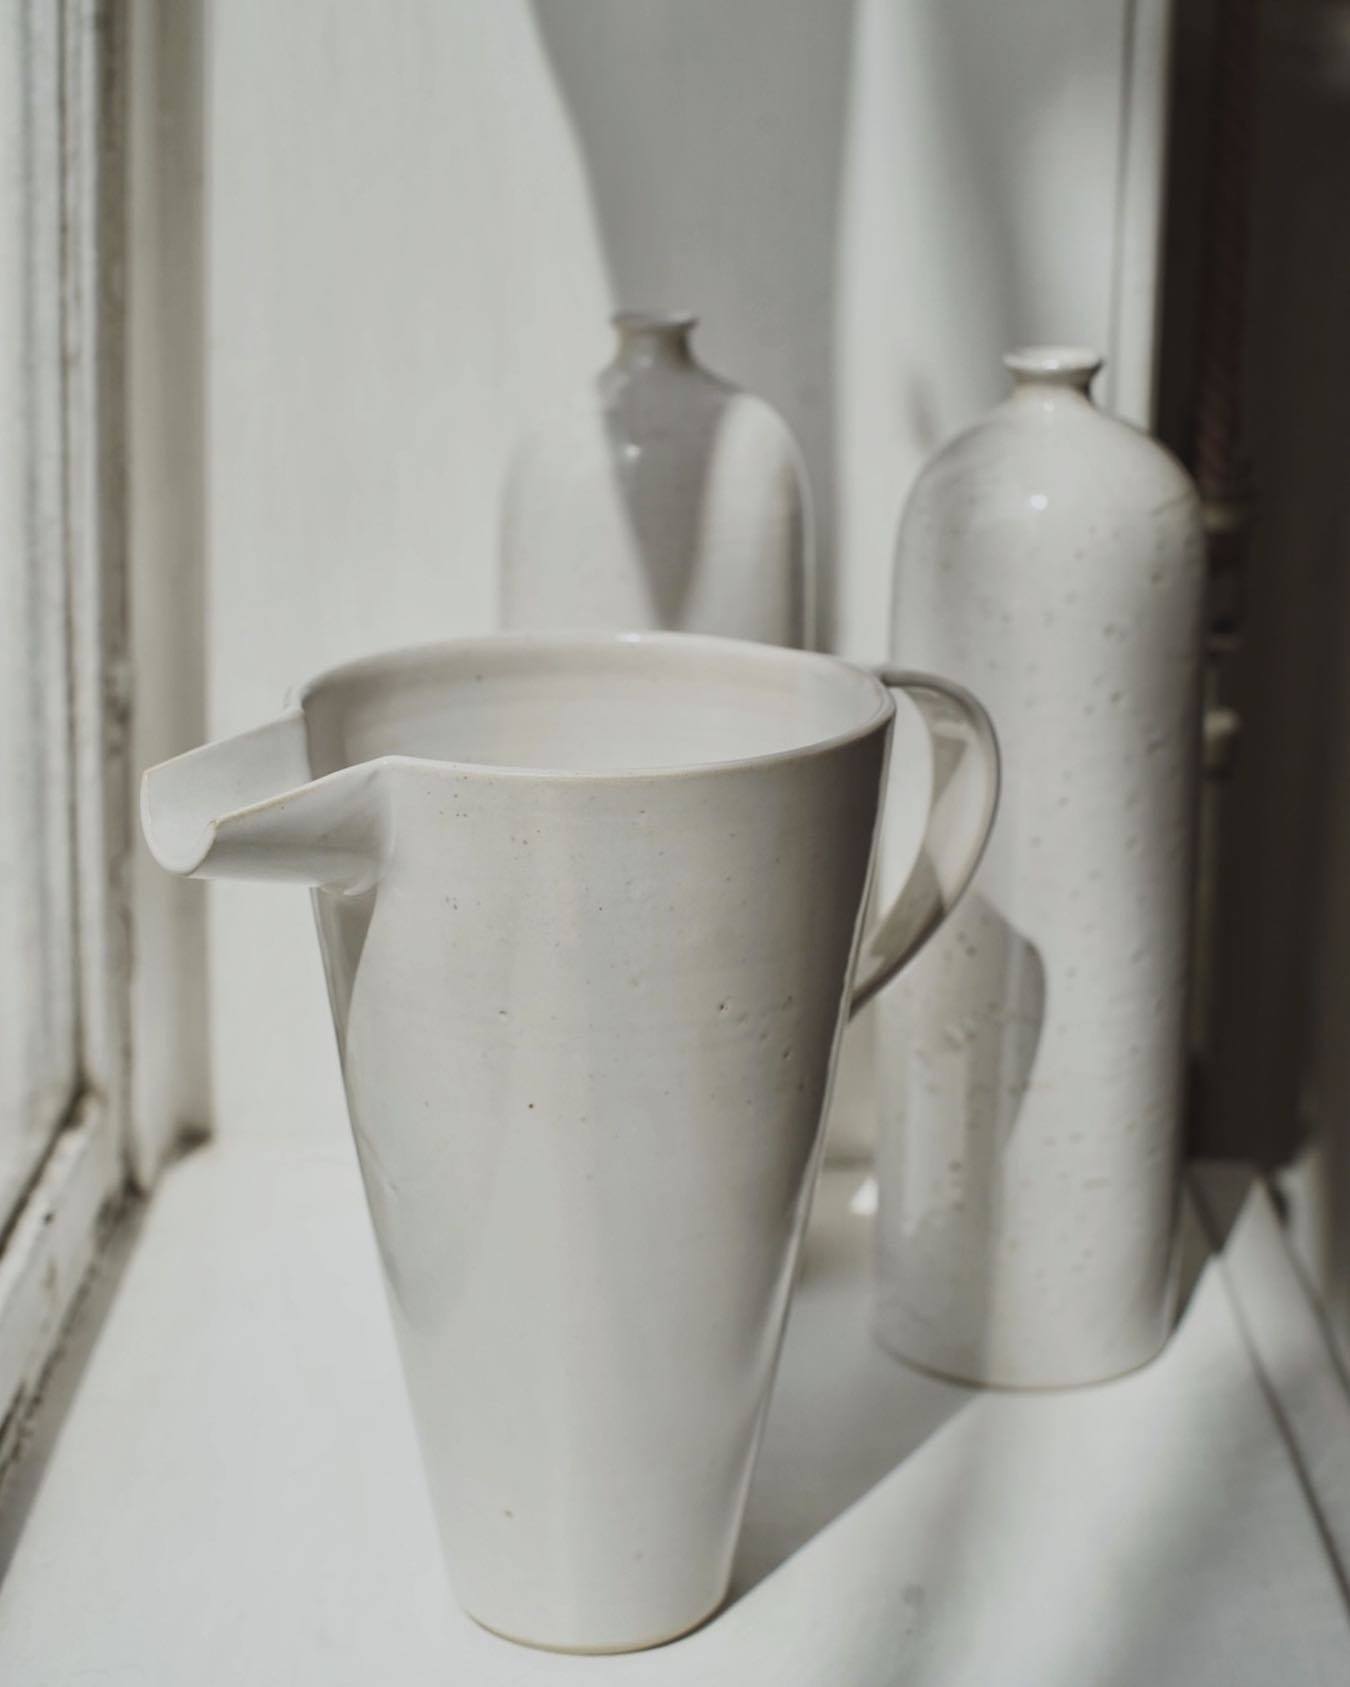 Fresh kiln morning 🤍

#fresh #morning #ceramics #krug #vase #handgemacht #spass #morandi #zurich